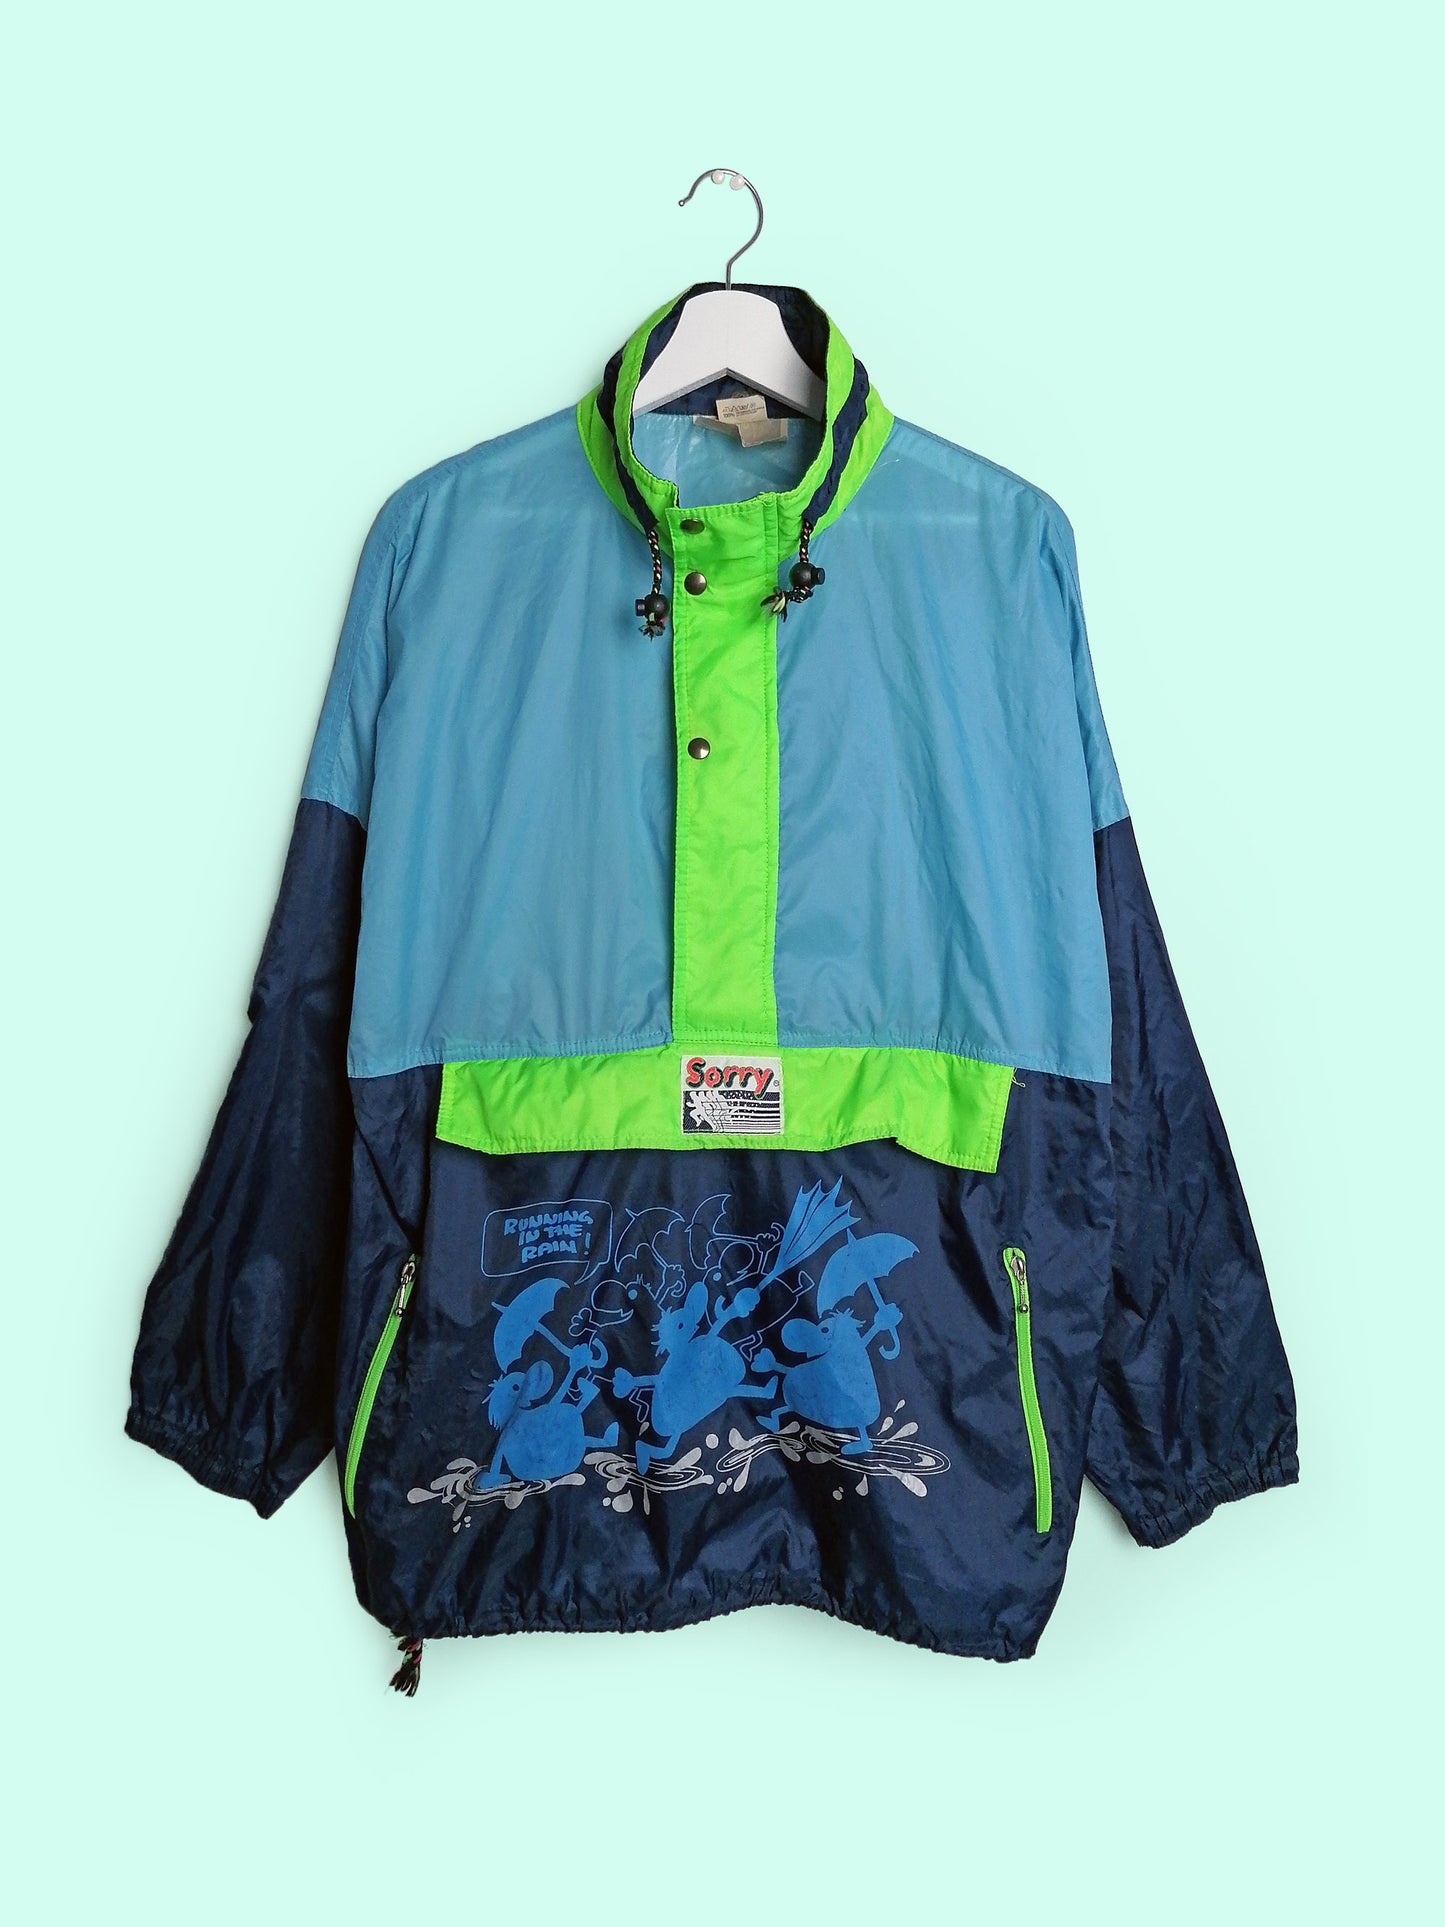 Vintage 80's SORRY Unisex Raincoat - size M